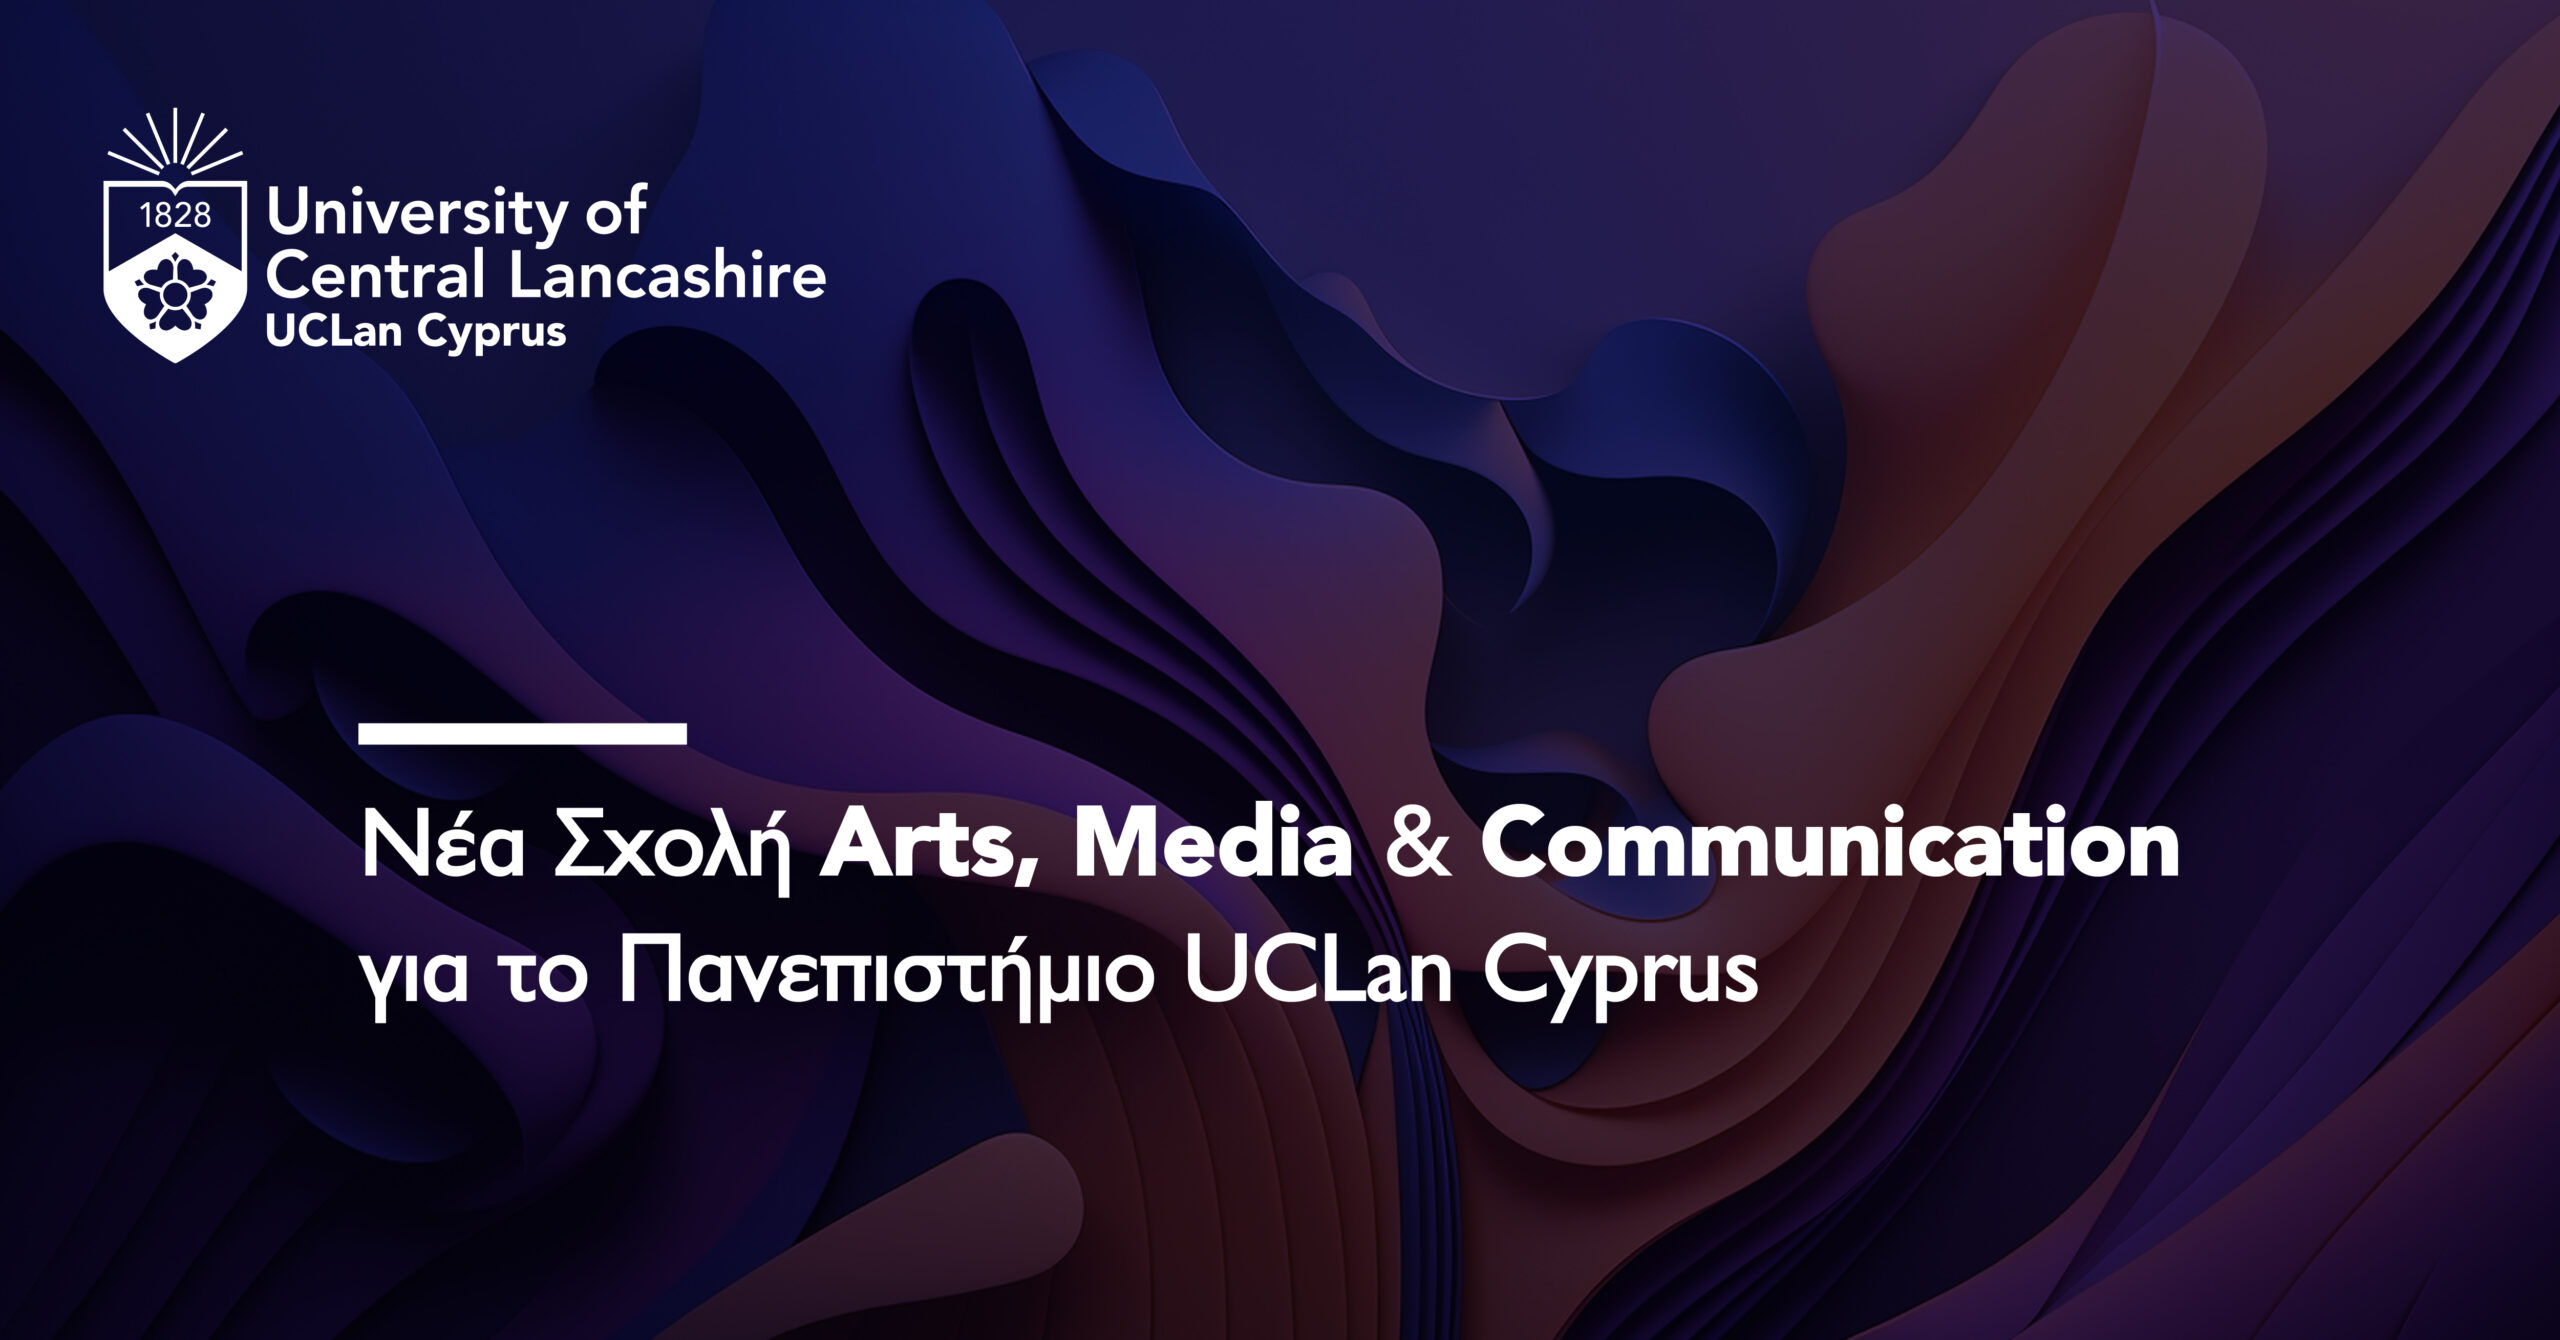 Tο Πανεπιστήμιο UCLan Cyprus προάγει τη δημιουργικότητα παρουσιάζοντας τη νέα Σχολή Arts, Media & Communication